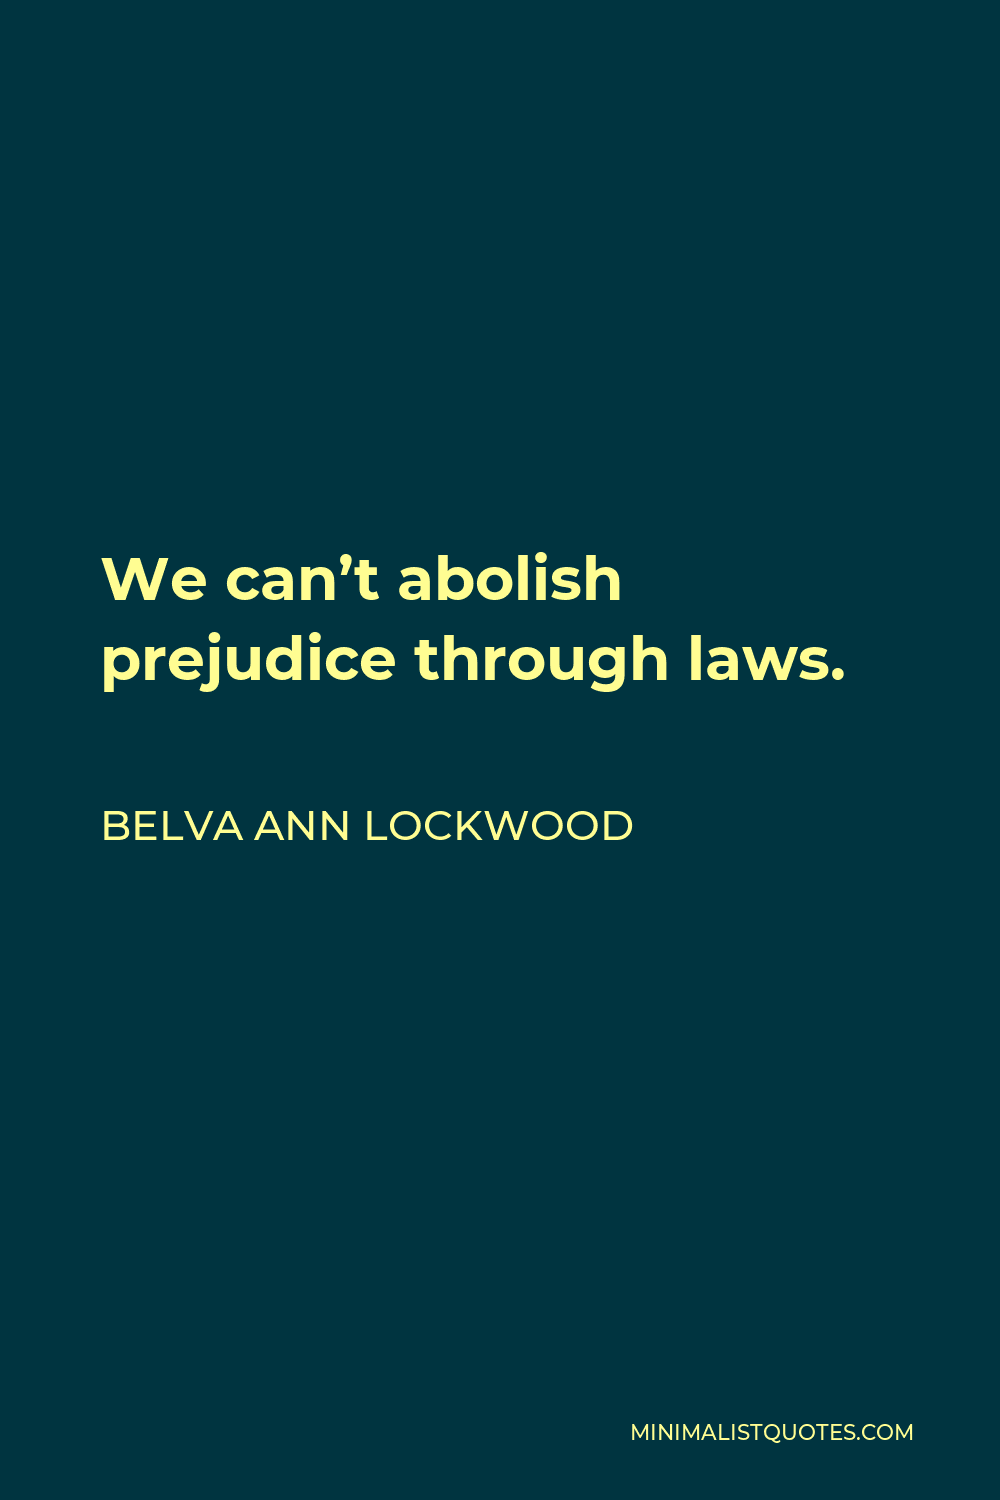 Belva Ann Lockwood Quote - We can’t abolish prejudice through laws.